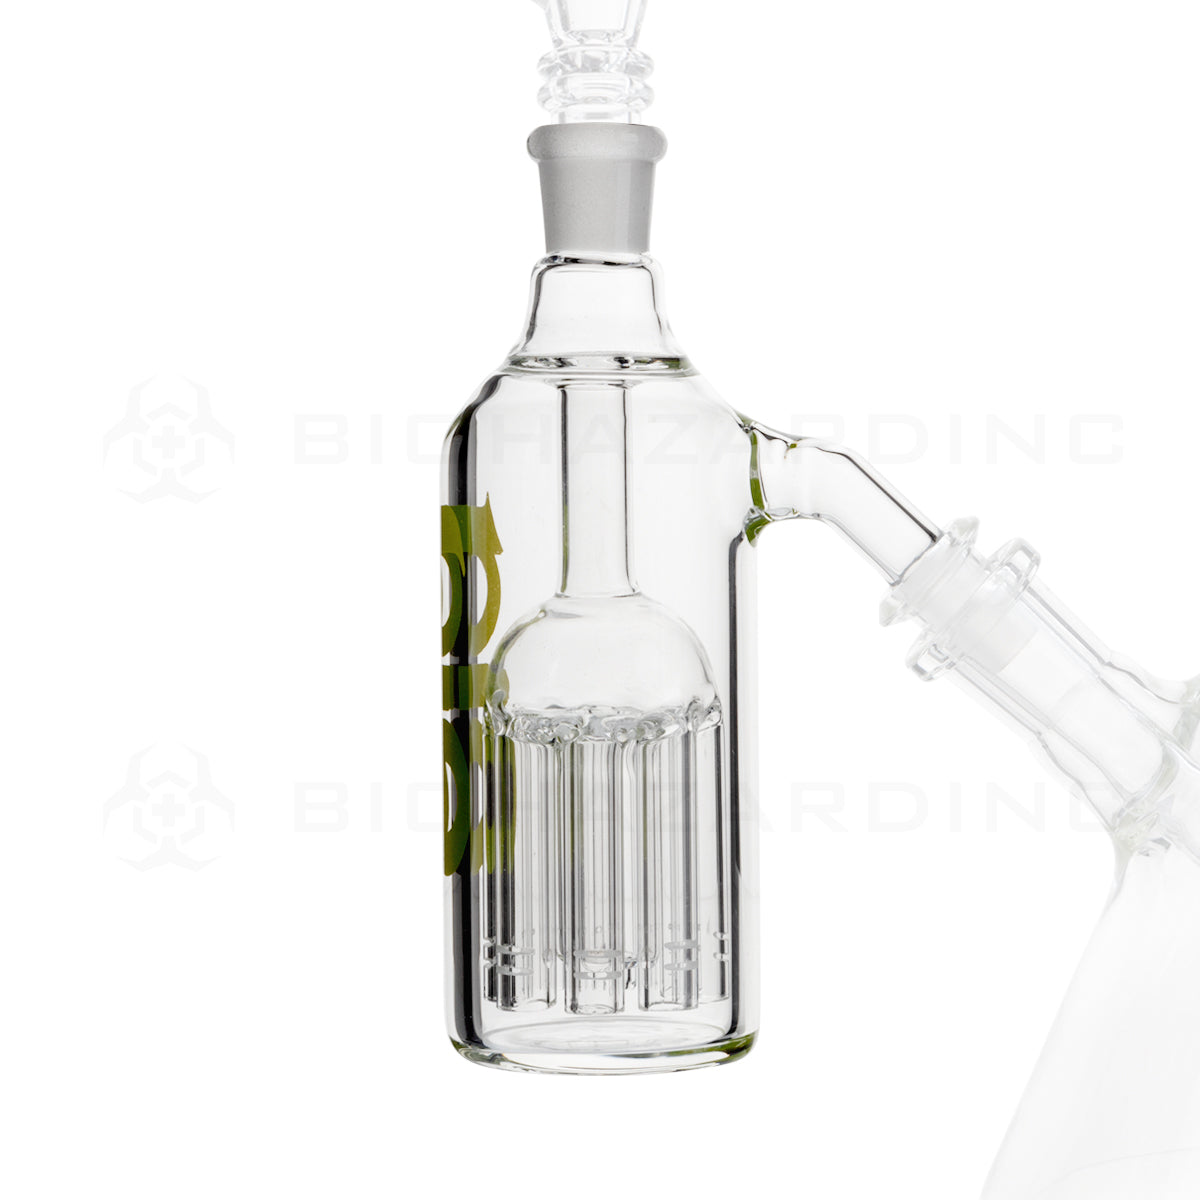 BIO Glass | 6-Arm Tree Percolator Ashcatcher - Green | 5.5" - 14/14 Joint - 45° Ash Catcher Bio Glass   